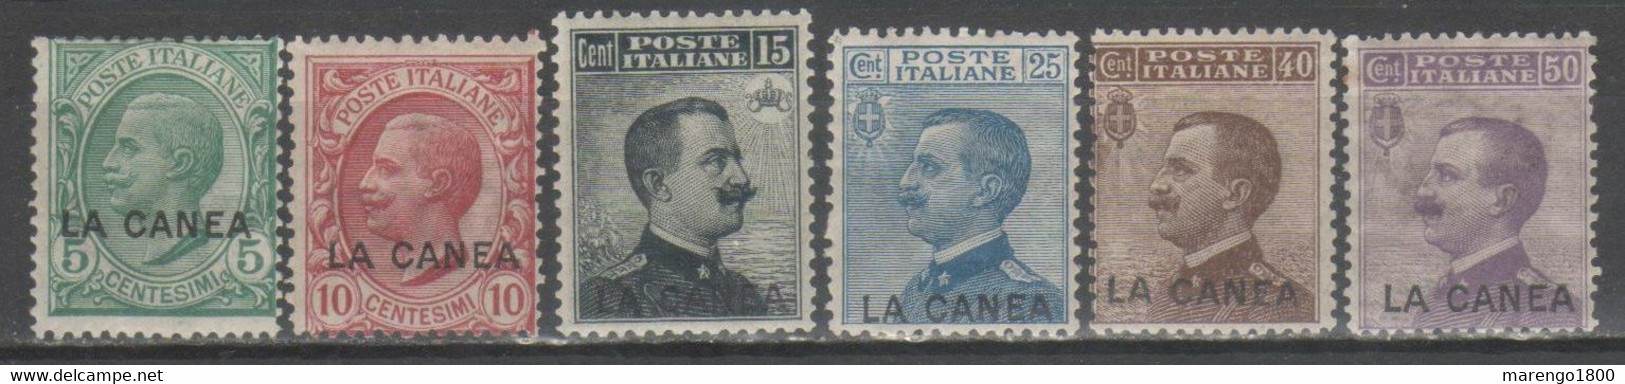 La Canea 1907-12 - Effigie *            (g7945) - La Canea